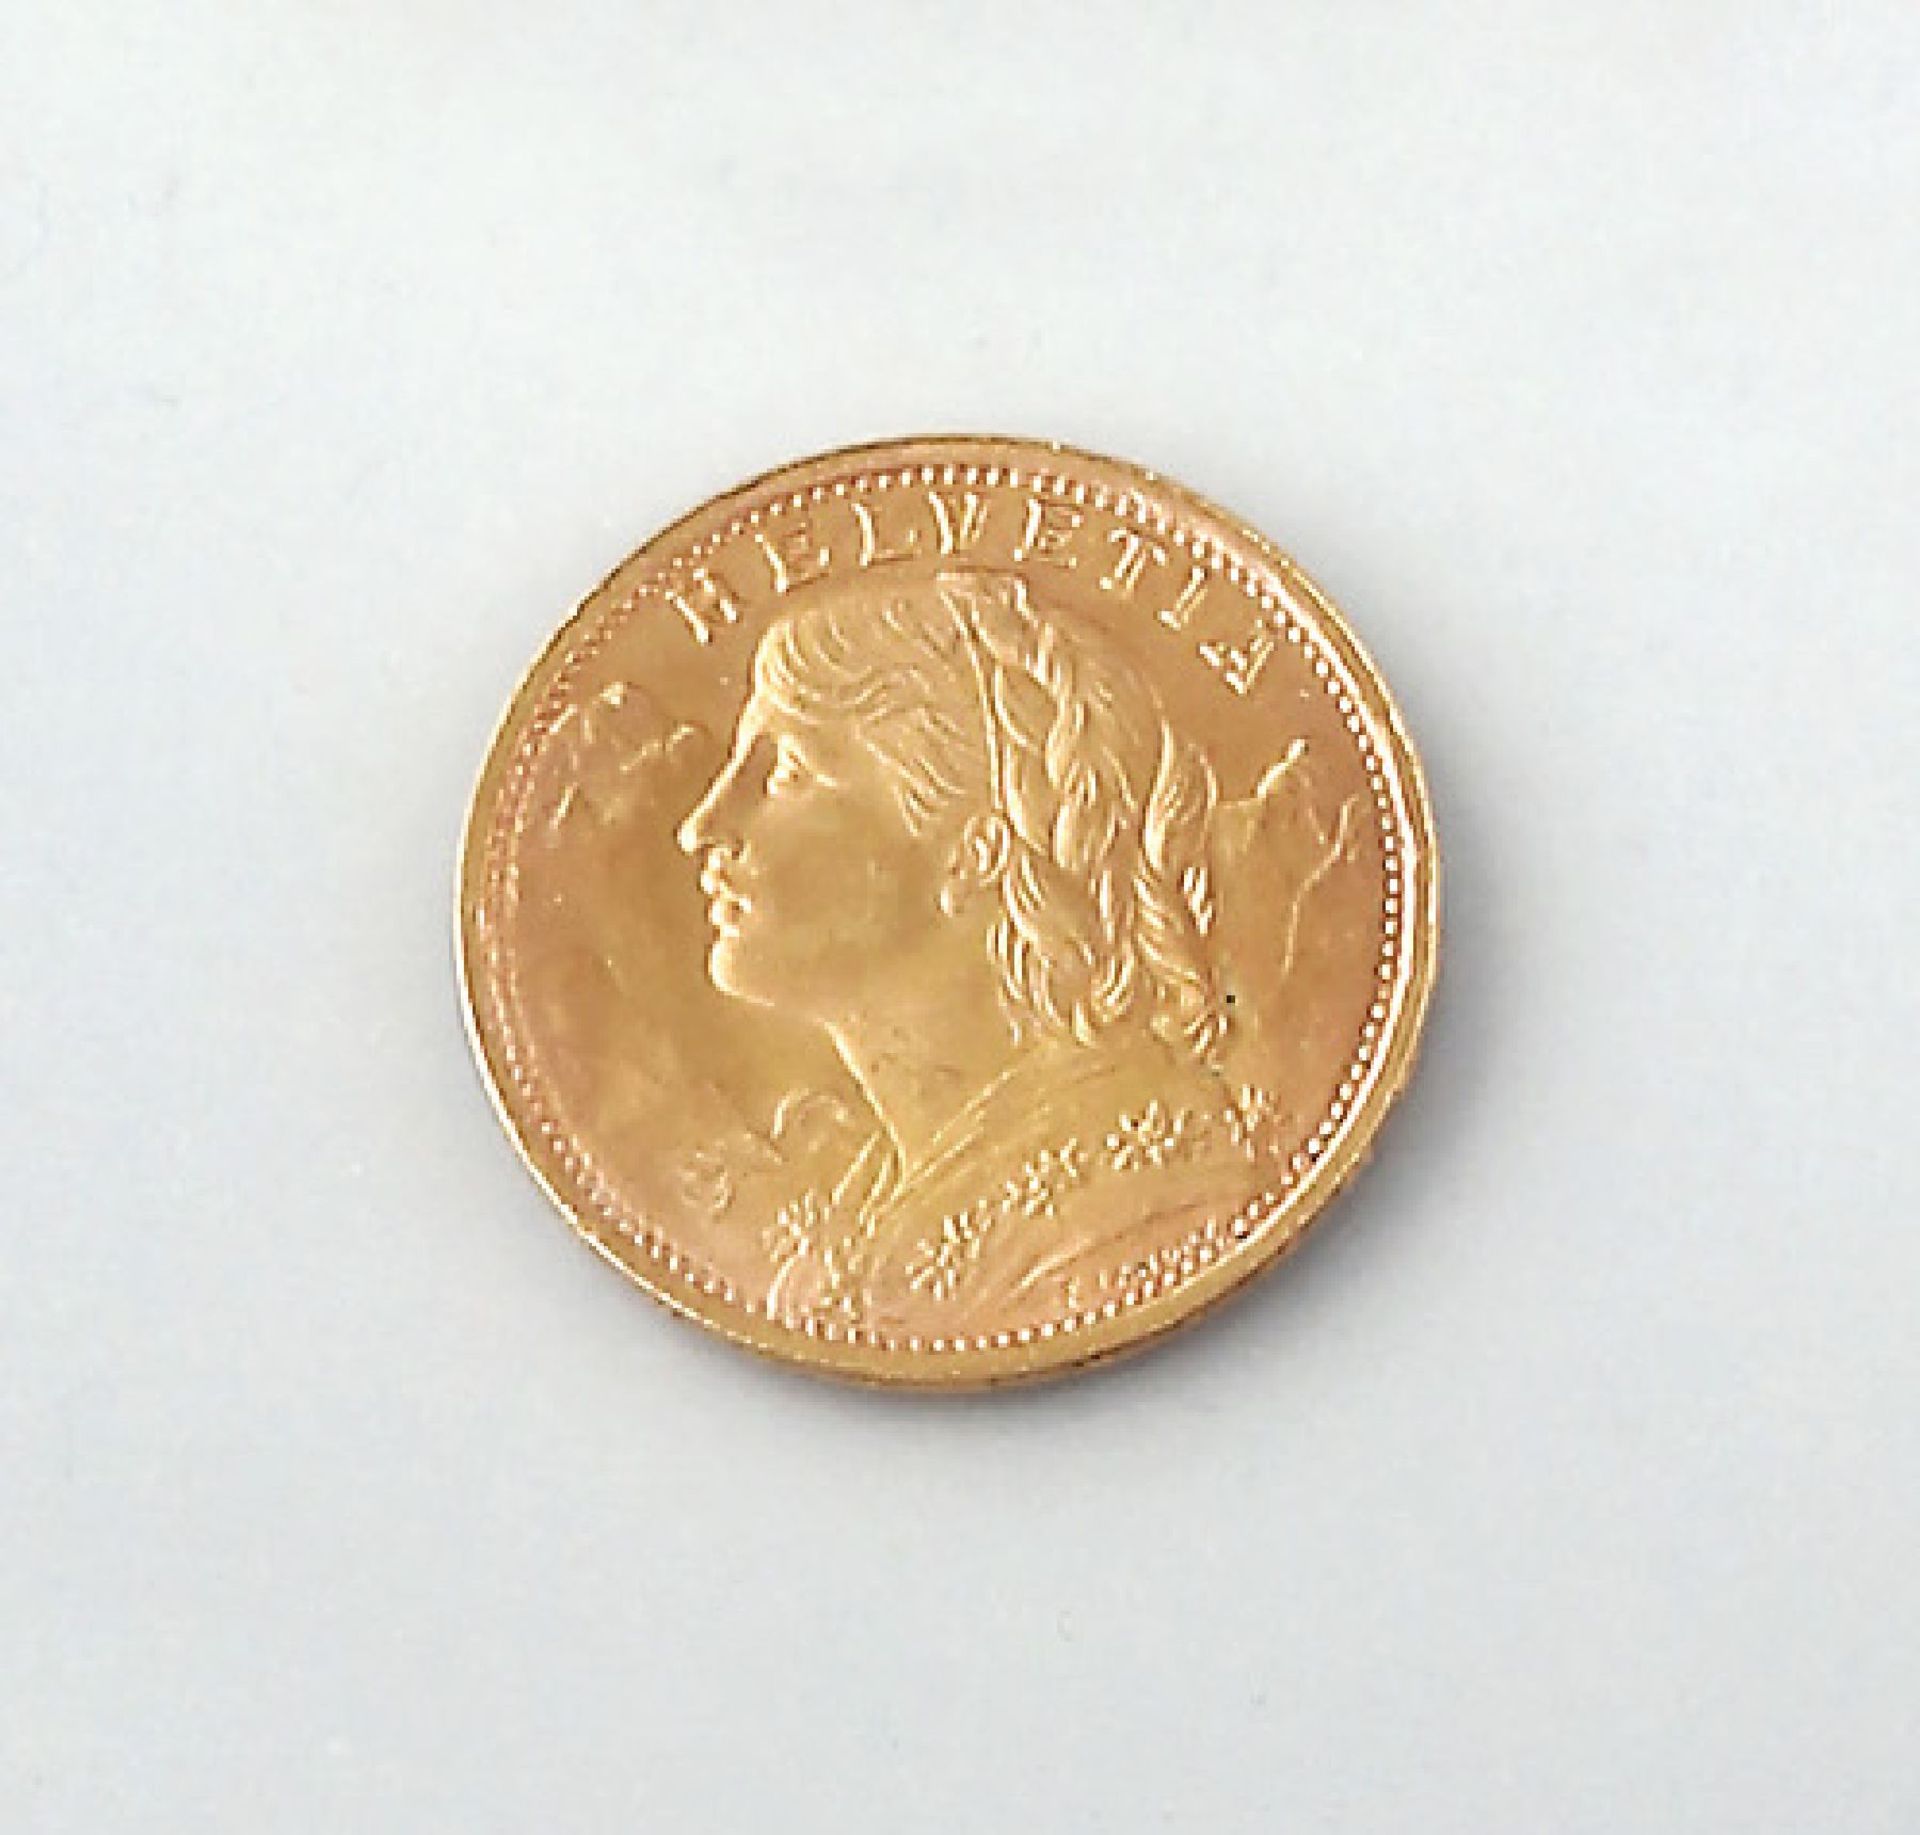 Goldmünze, 20 Franken, Schweiz, 1947, sogn. Vreneli, Prägemarke BGold coin, 20 Swiss Francs,